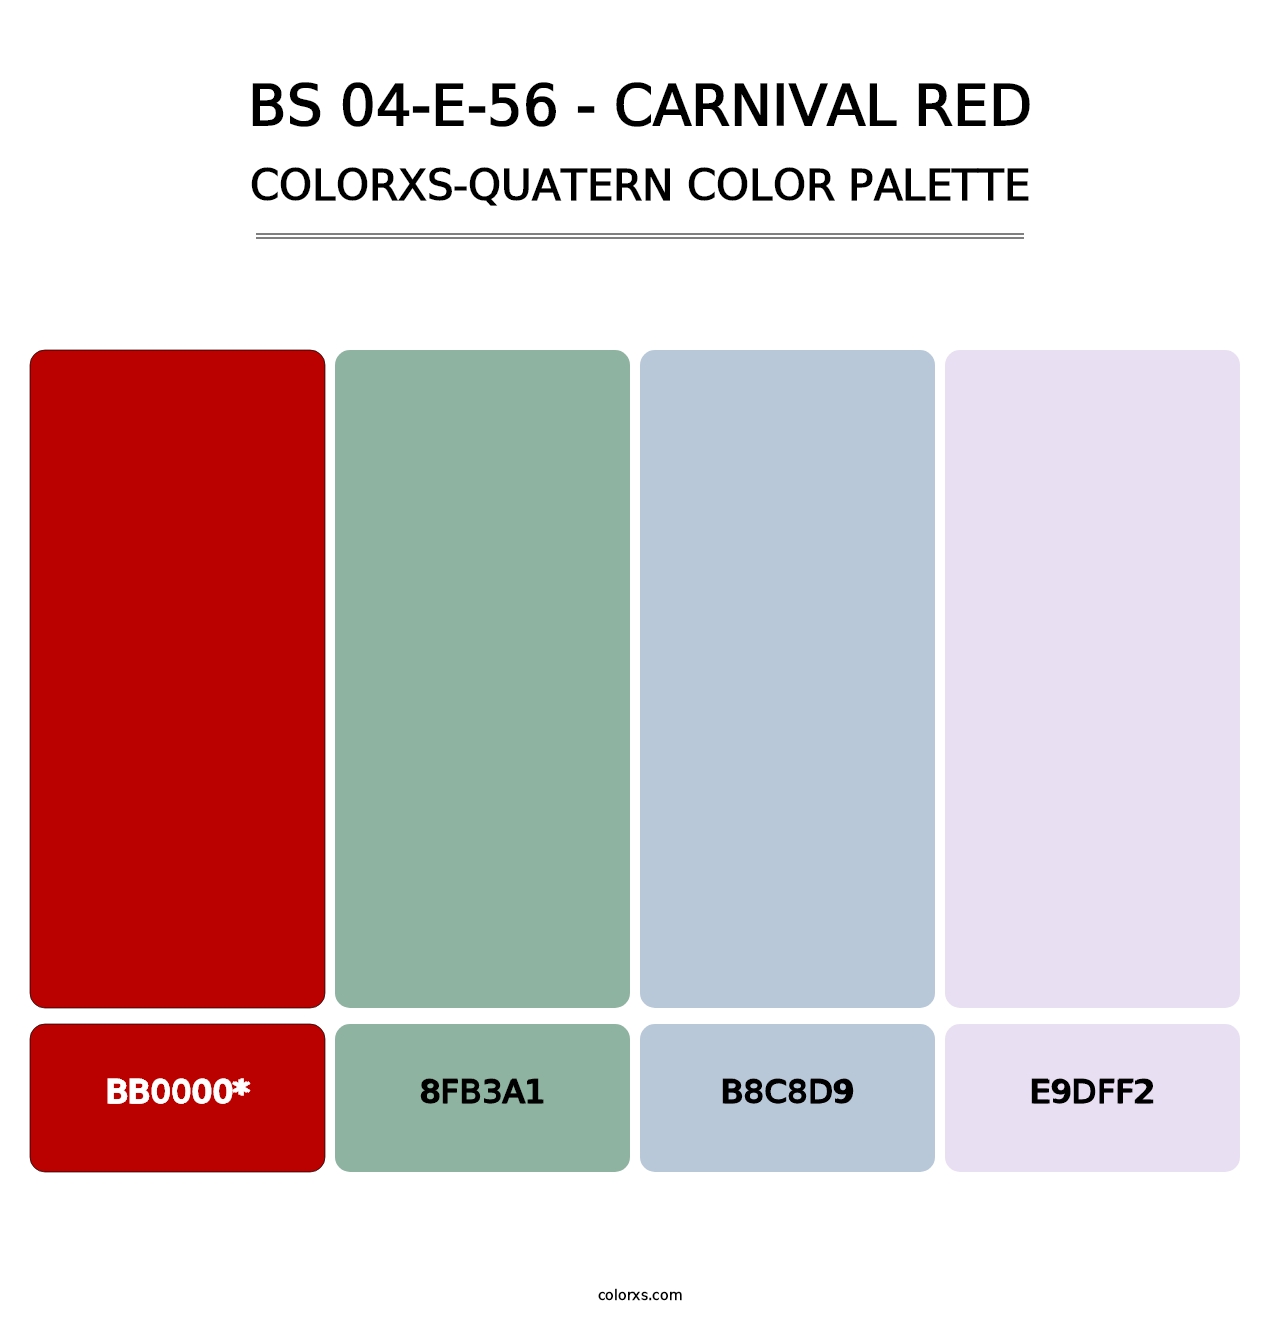 BS 04-E-56 - Carnival Red - Colorxs Quatern Palette